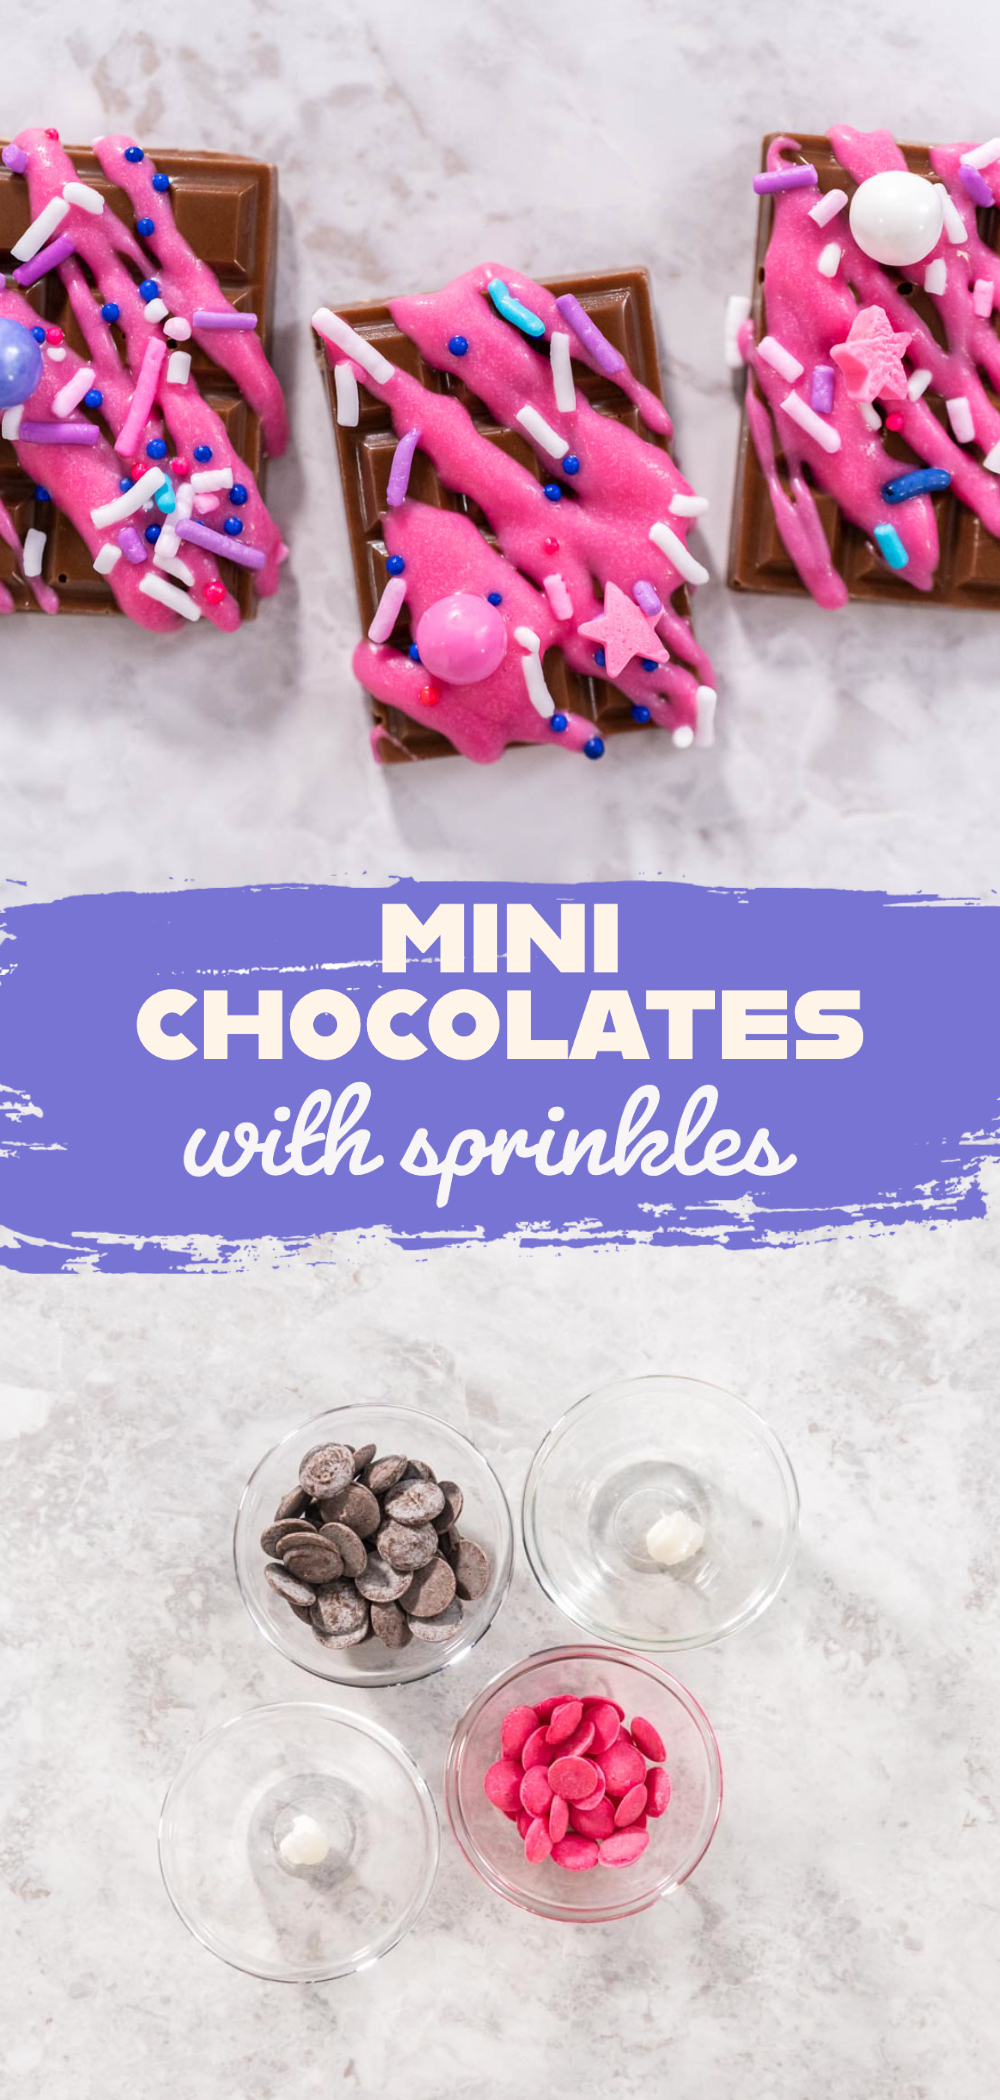 Mini chocolates with sprinkles